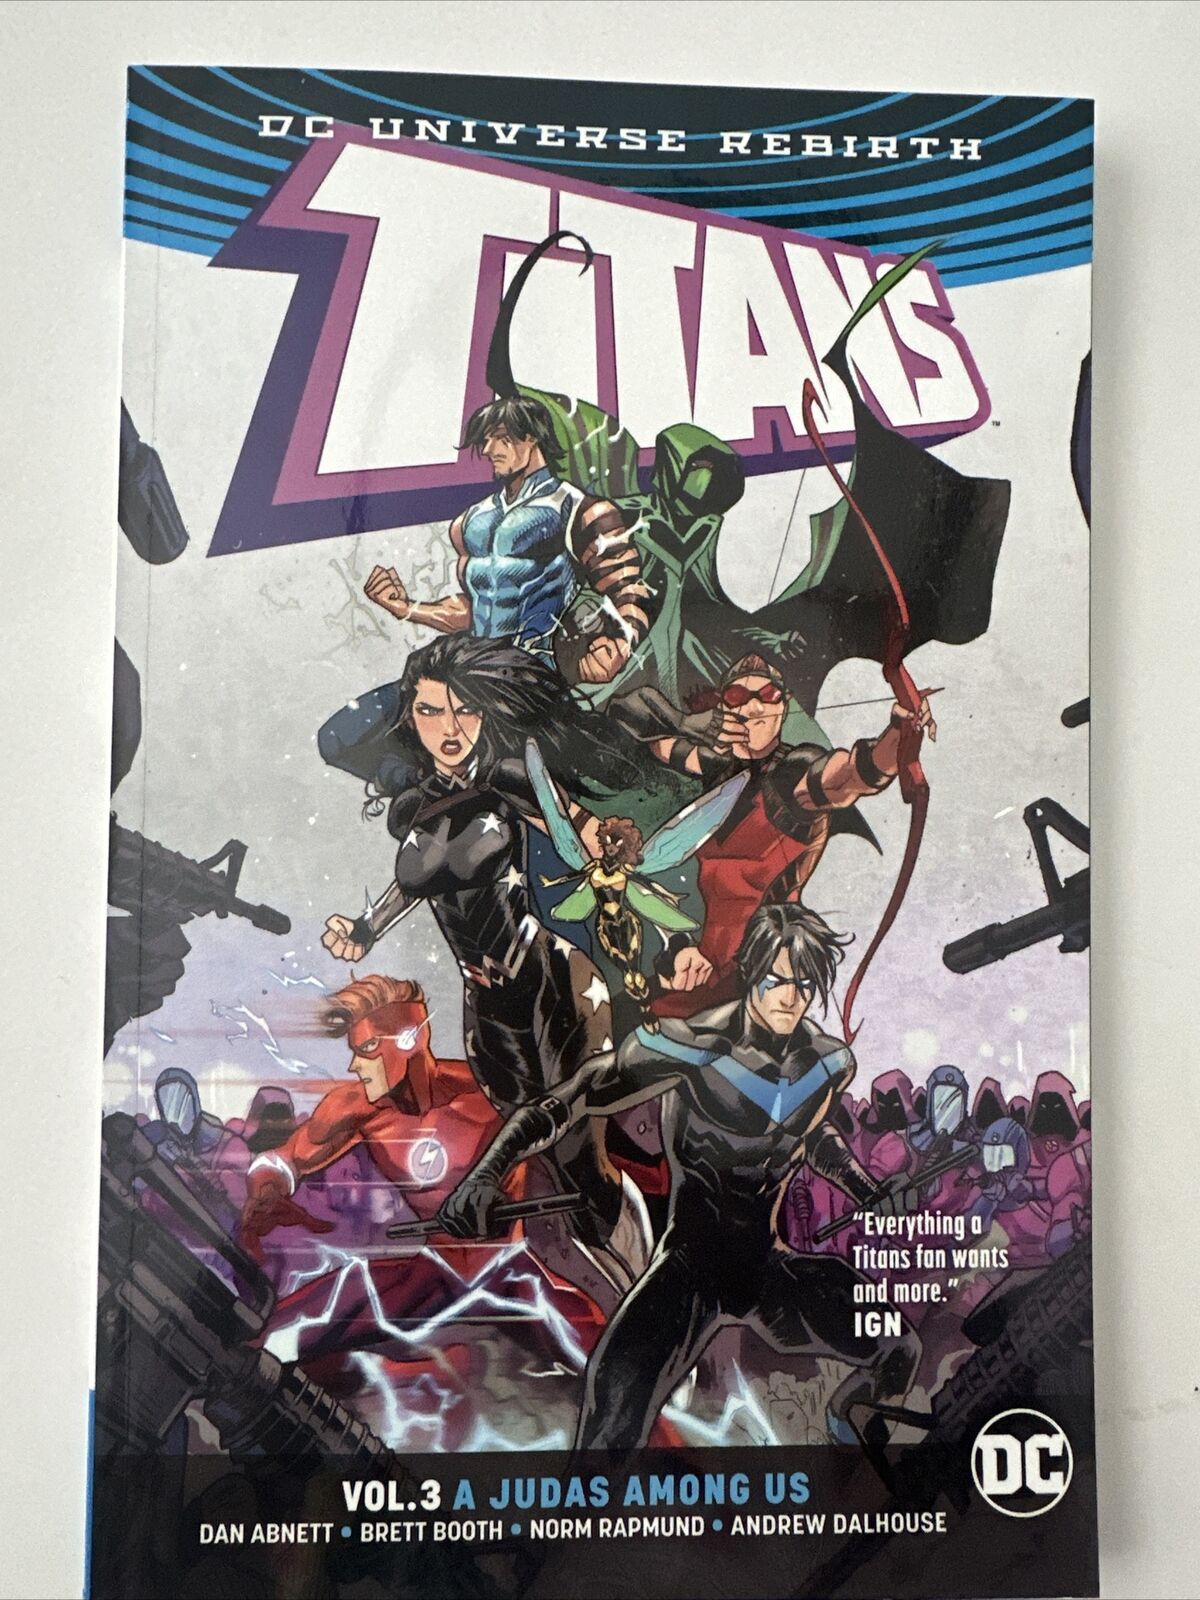 Titans #3  JUDAS AMONG US (DC Comics April 2018)